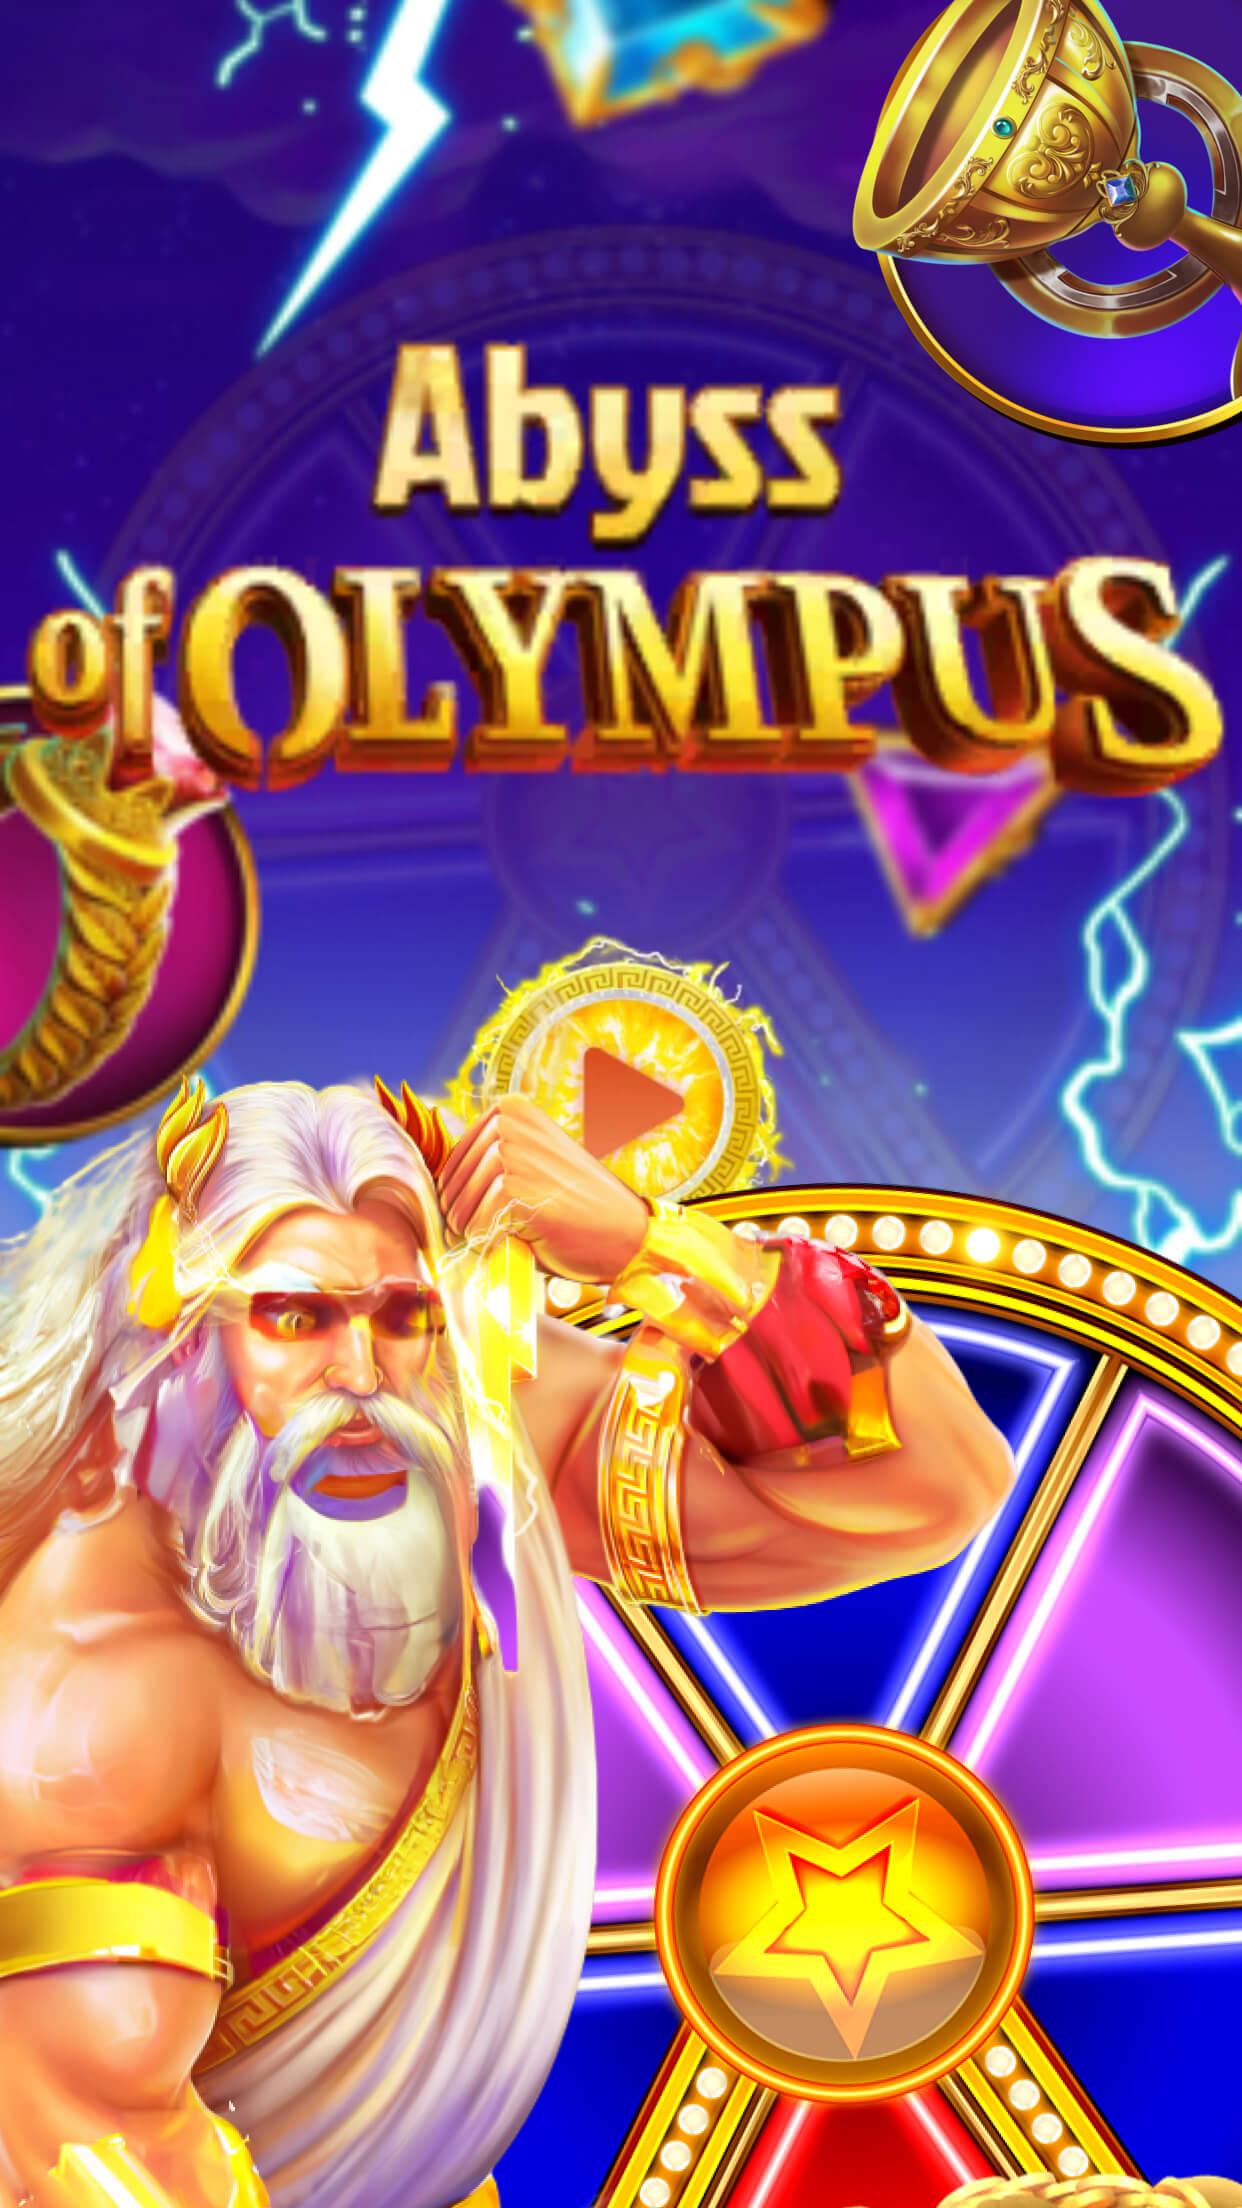 Rise of olympus. Zeus: Master of Olympus обложка. Heroes of Olympus Android game. Olympus Rising. The saving the Olympus Android game.